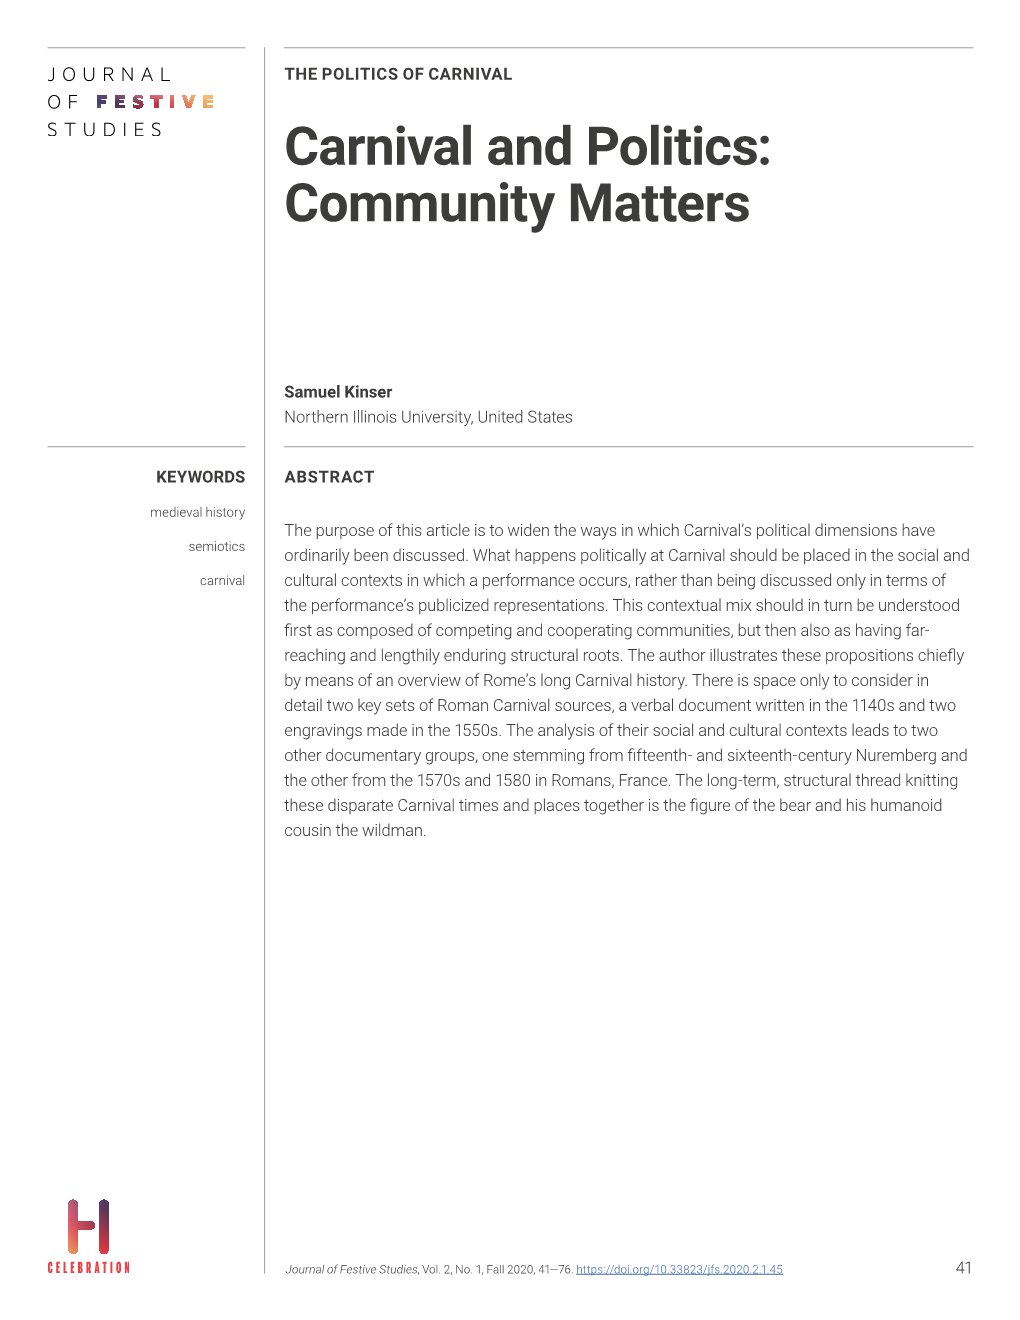 Carnival and Politics: Community Matters